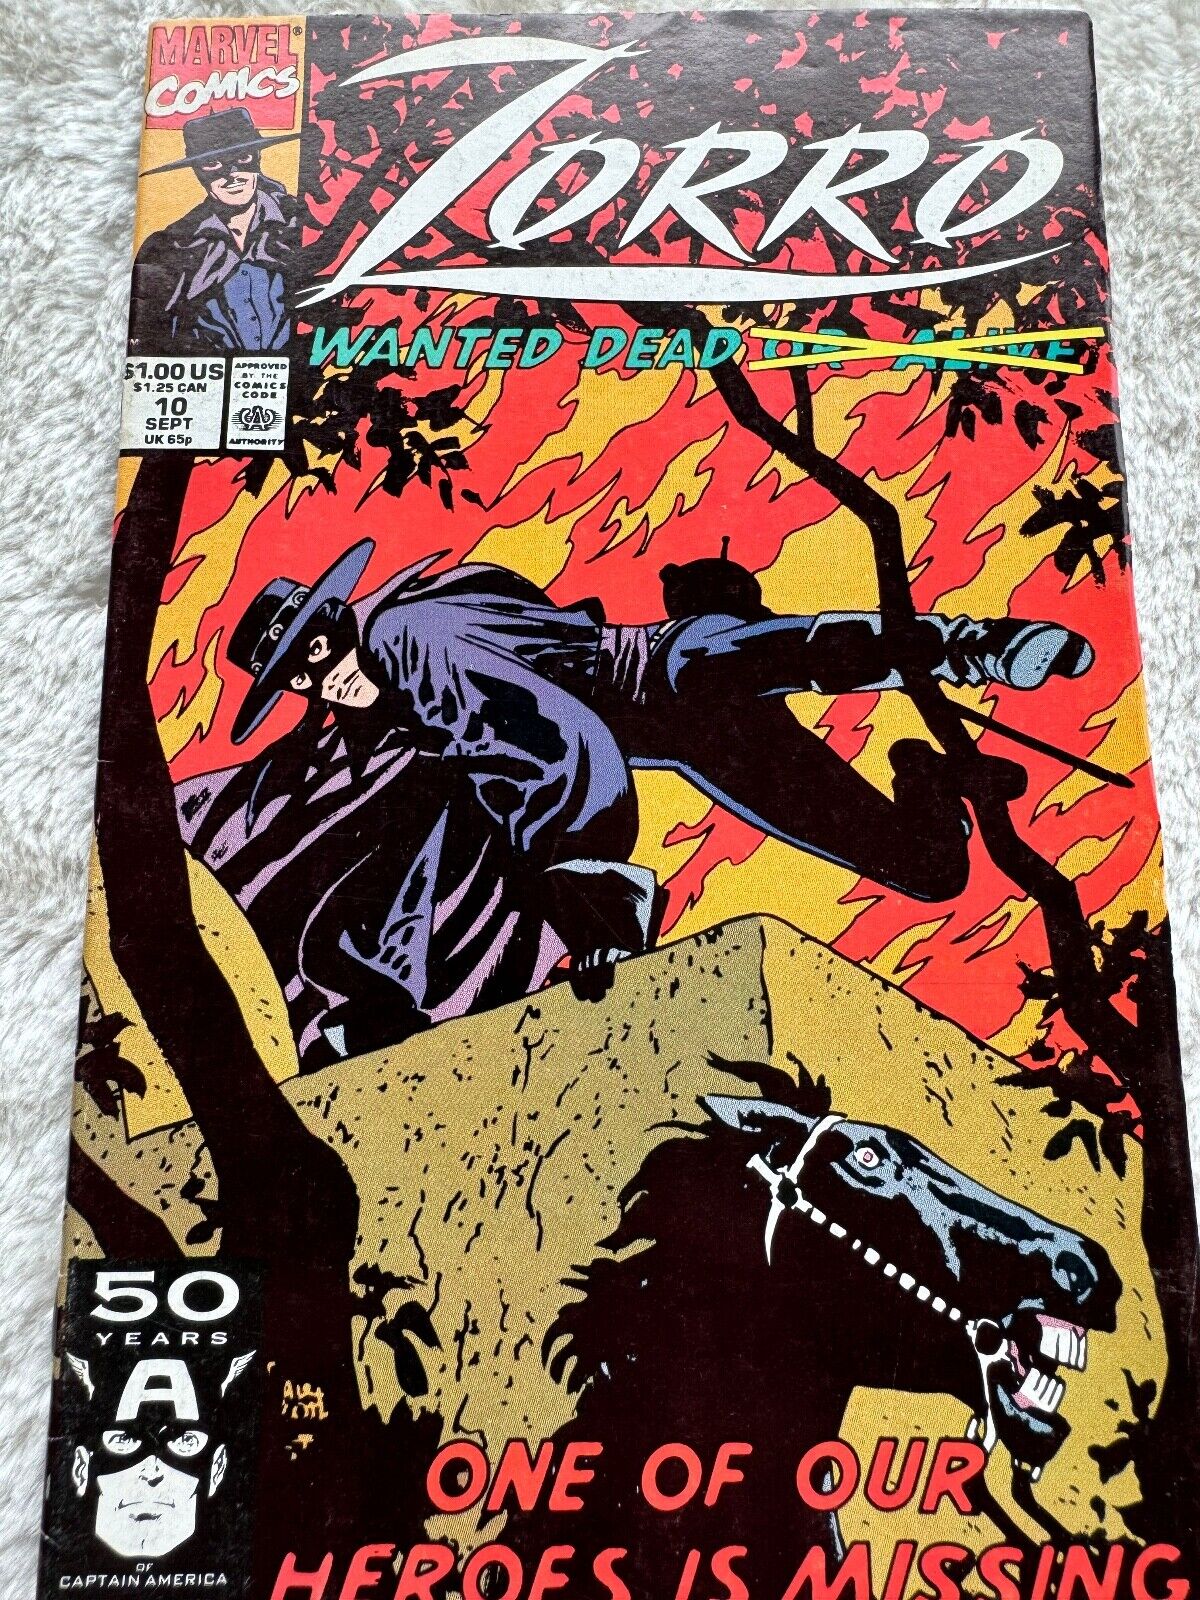 Zorro #10 (Marvel 1991) comic book